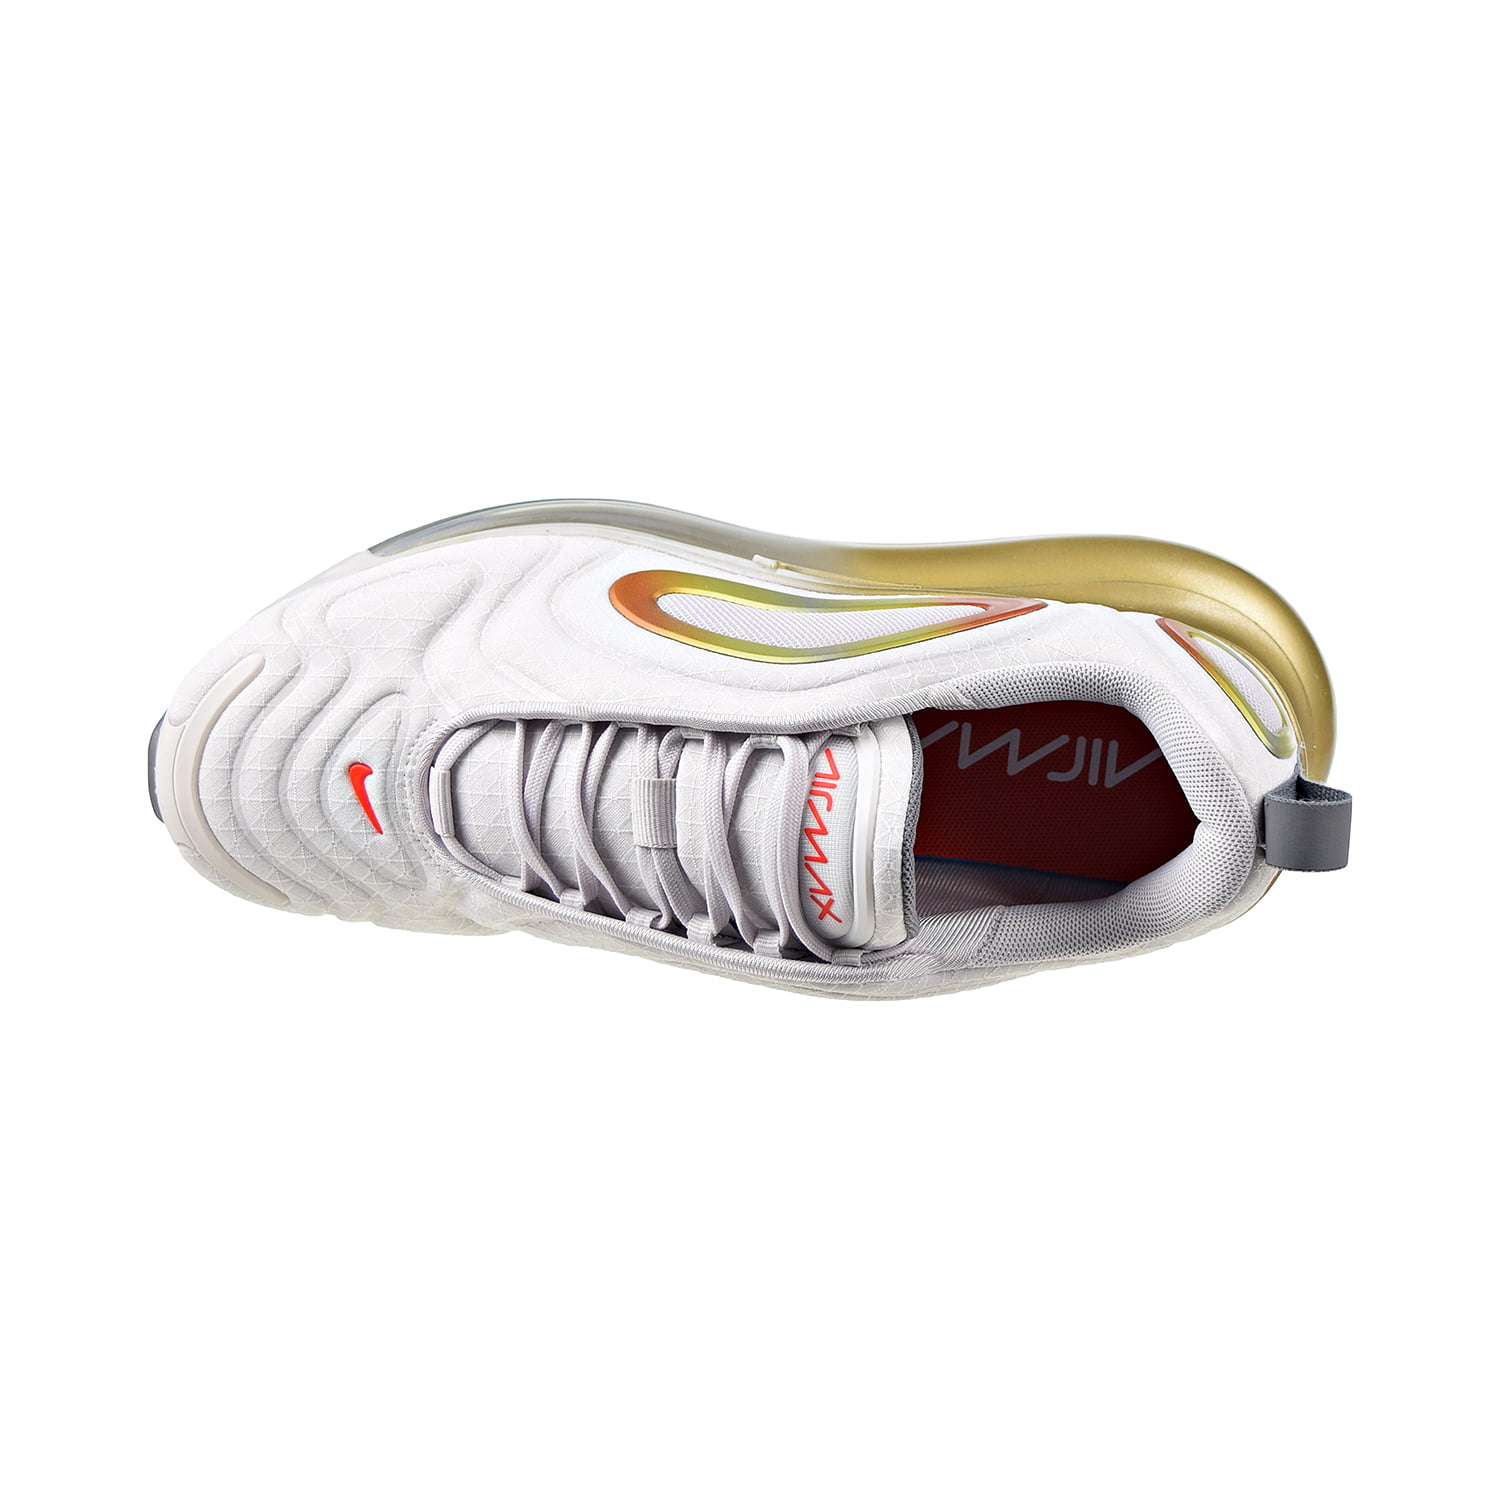 Tussendoortje Toneelschrijver Likeur Nike Air Max 720 Men's Shoes Summit White-Team Orange-Vast Grey ci3870-100  - Walmart.com